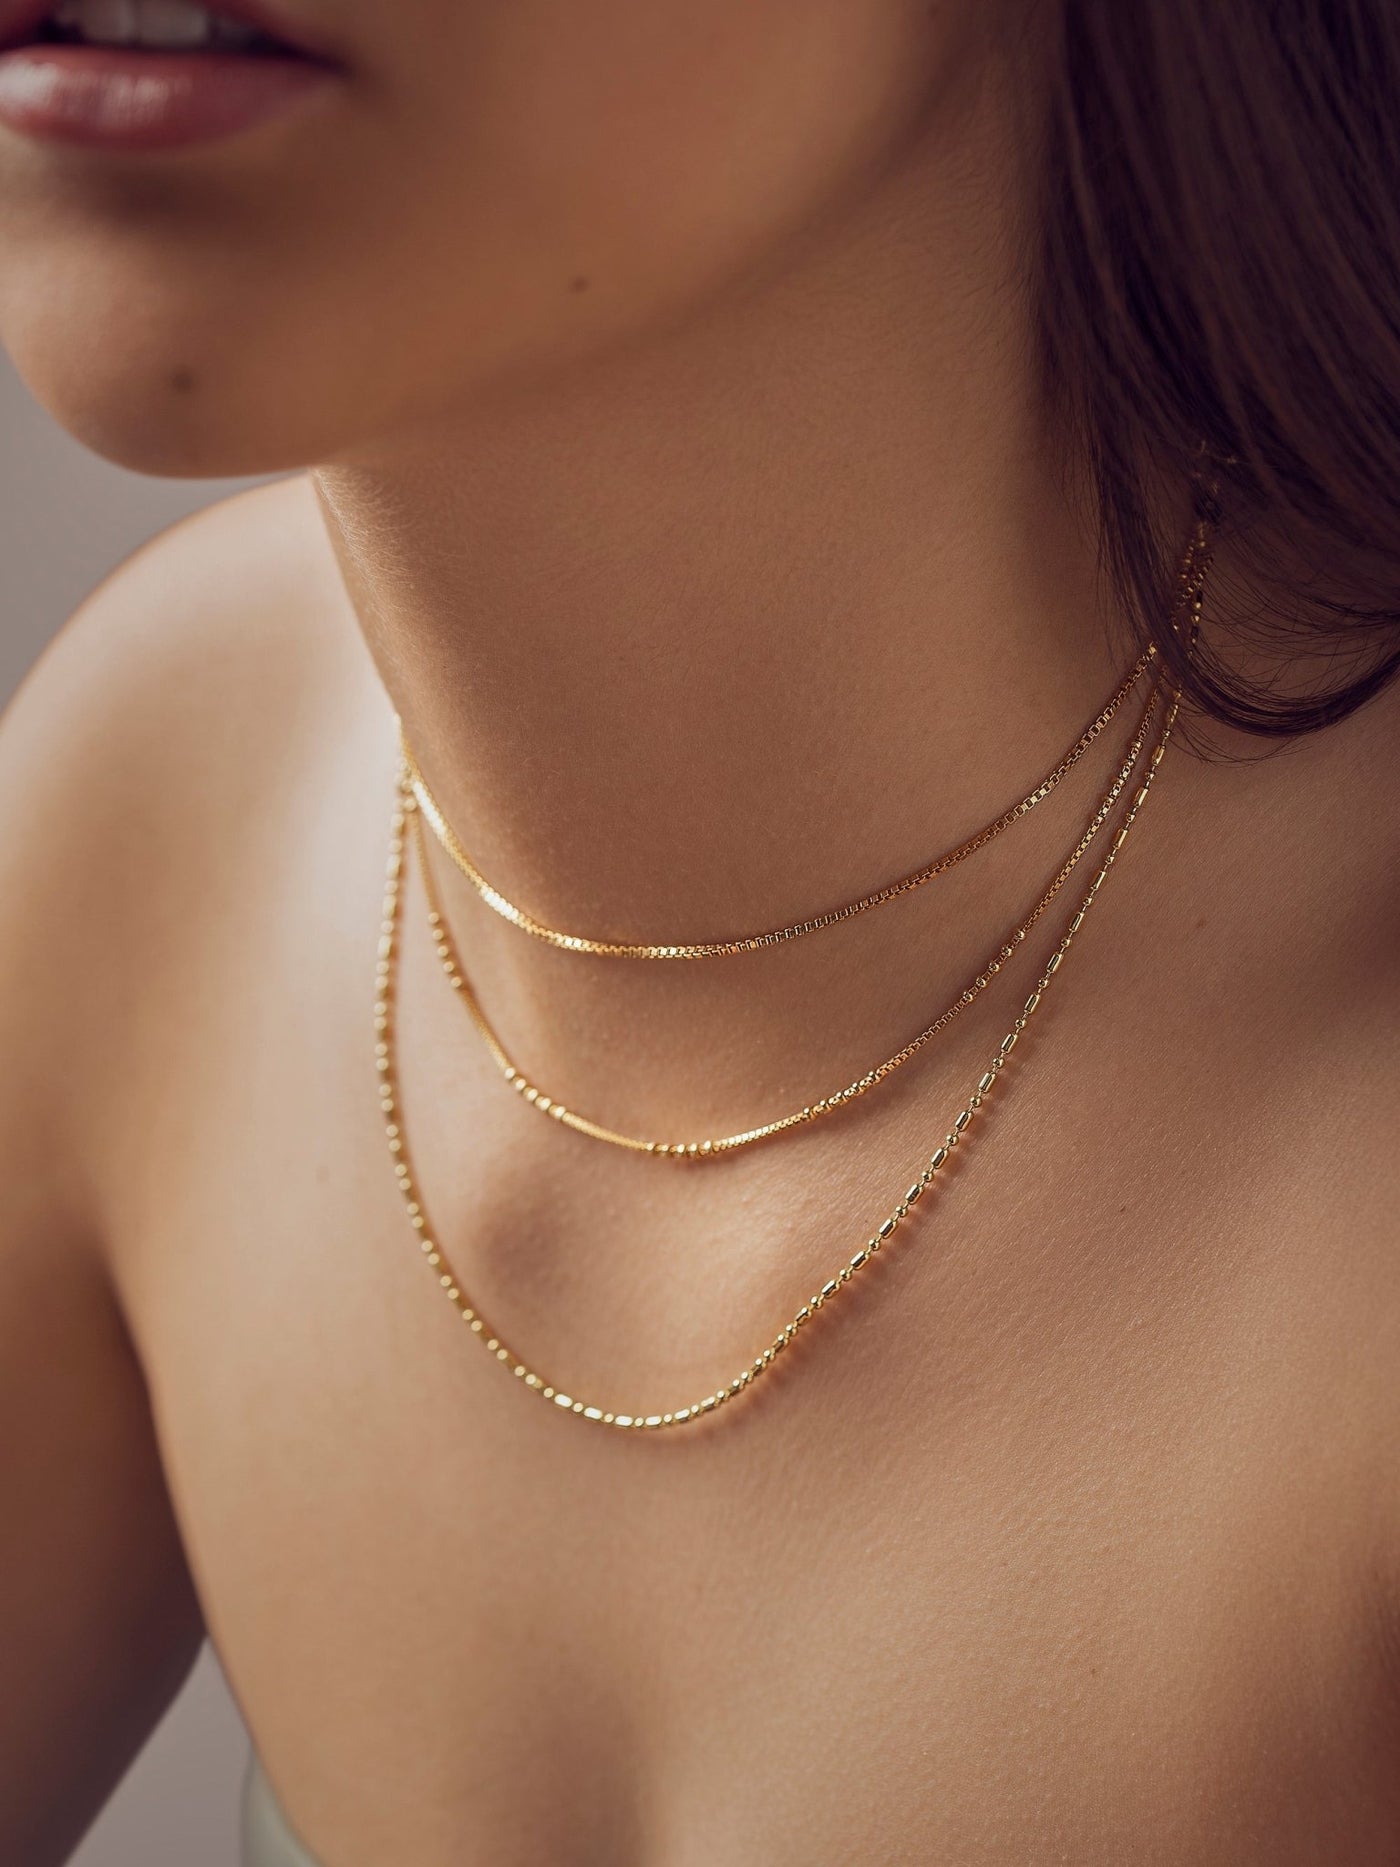 Bead Chain Necklace - 24K Gold PlatedAnniversary GiftBackUpItemsLunai Jewelry